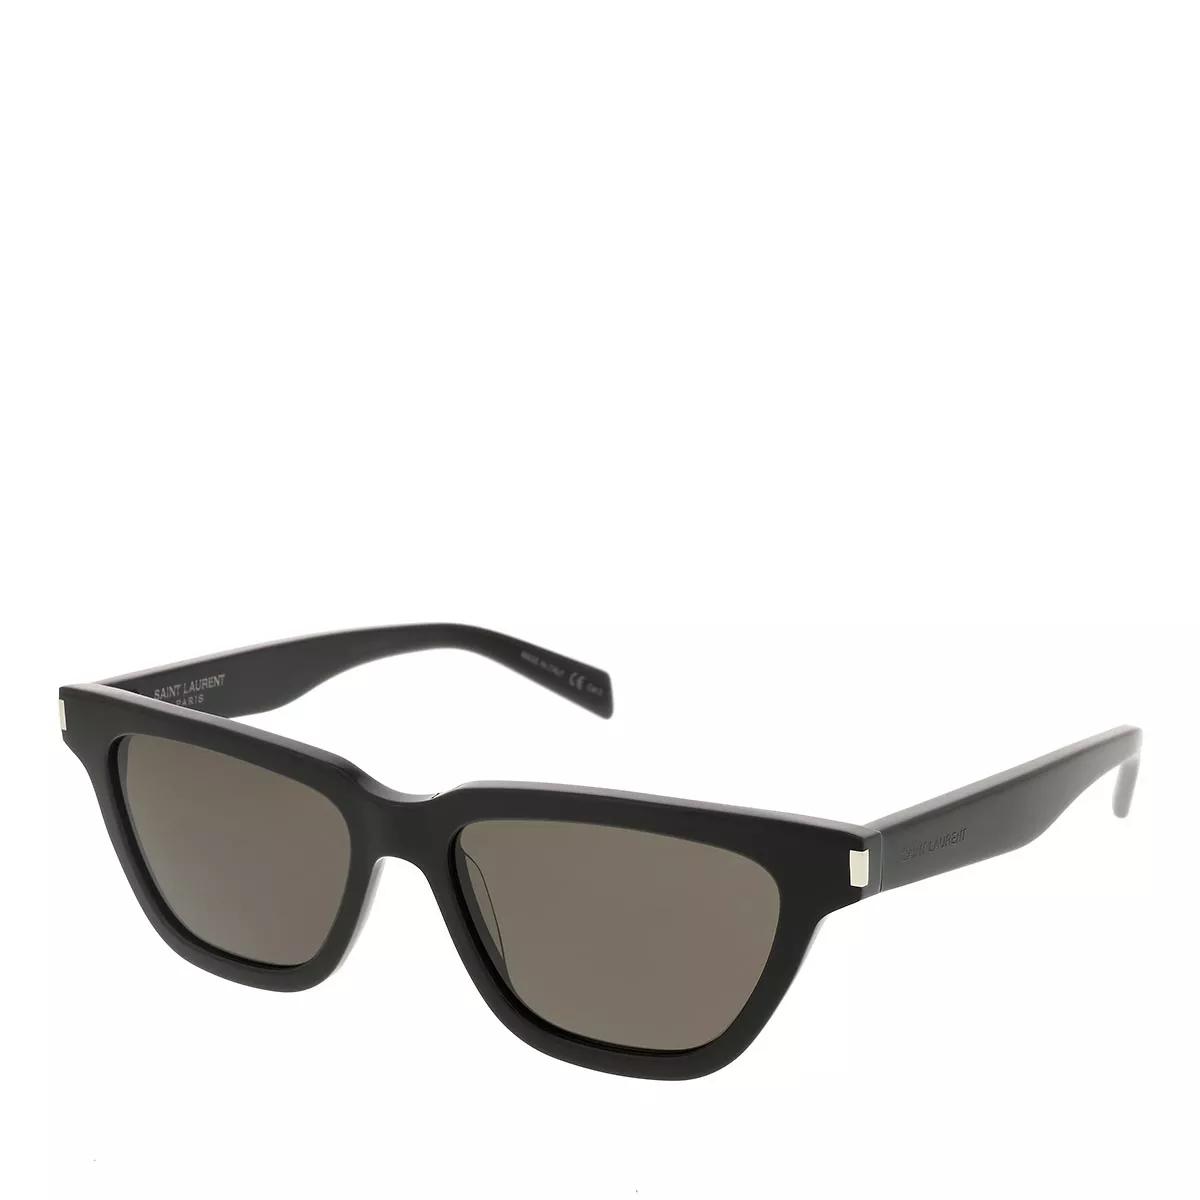 Sunglasses Saint Laurent SL 462 Sulpice 008 53